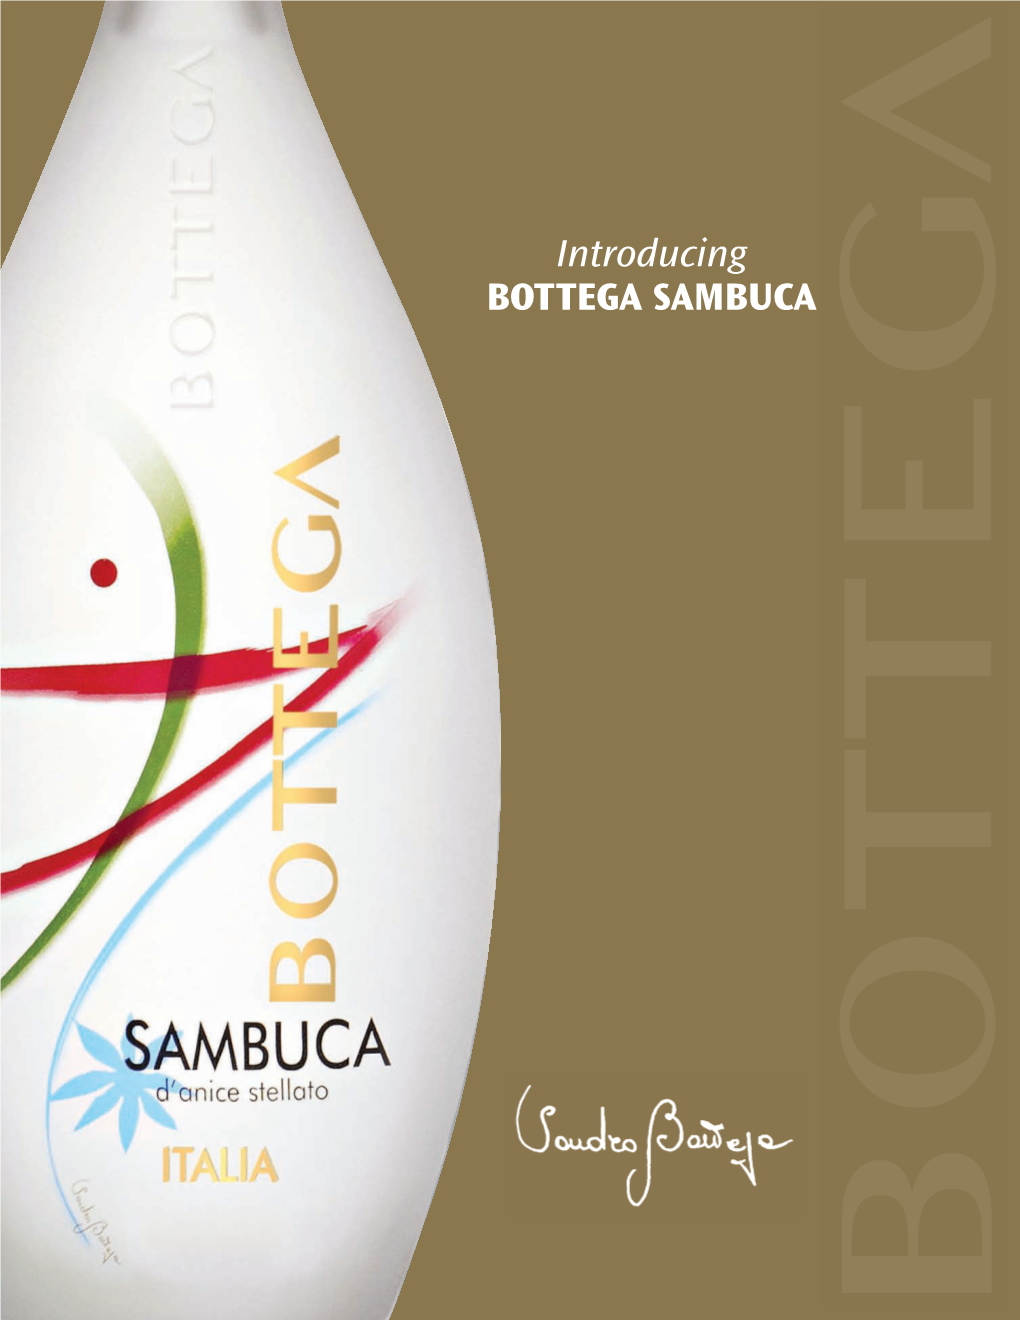 Introducing BOTTEGA SAMBUCA